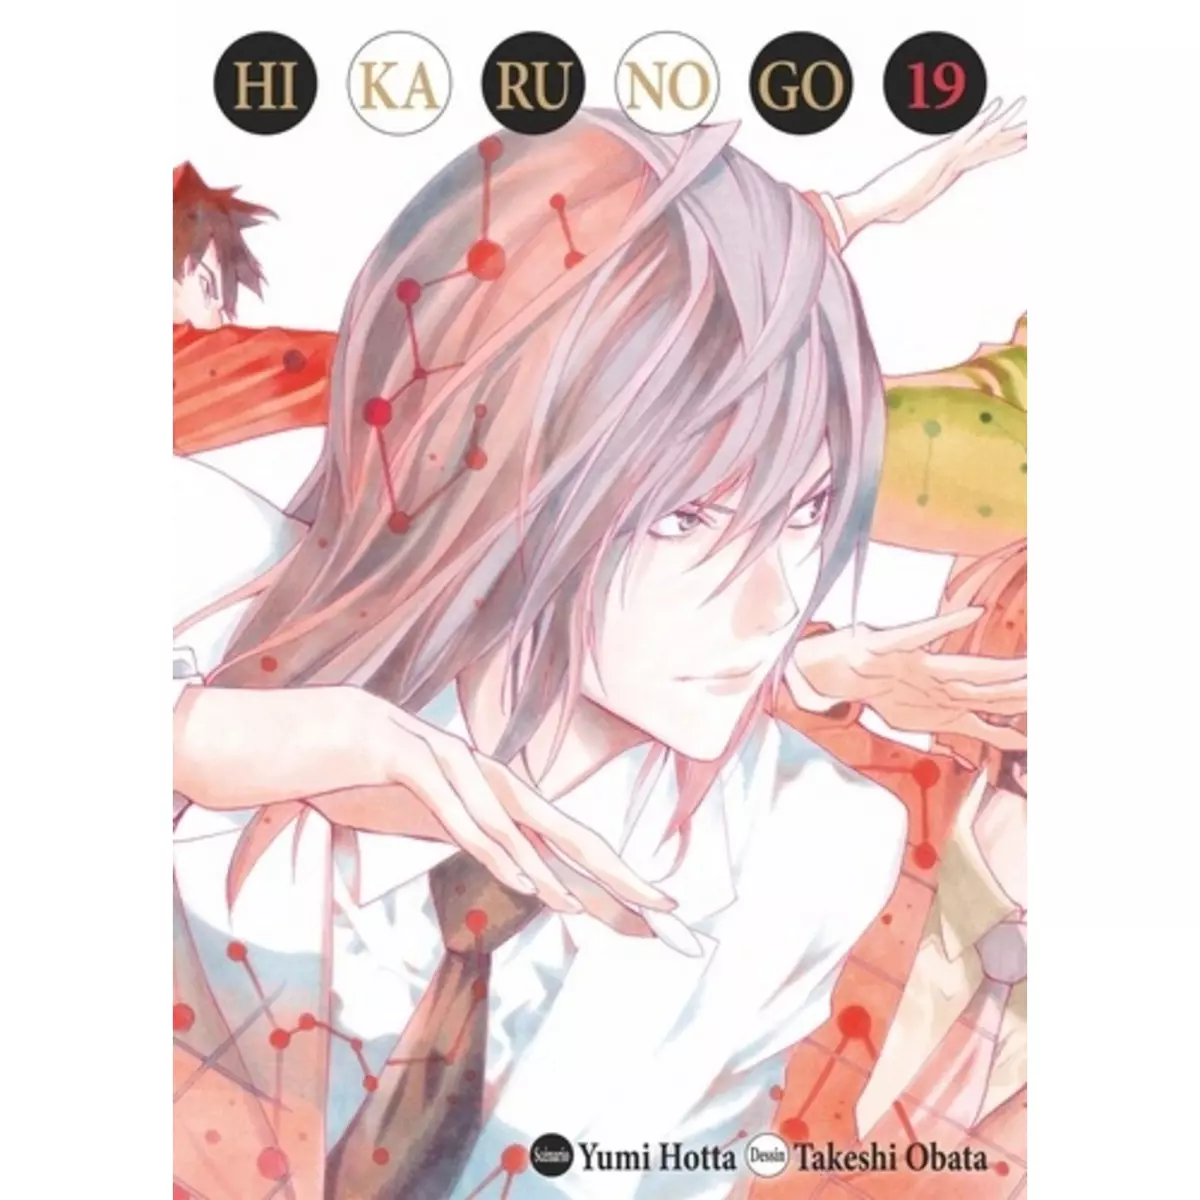  HIKARU NO GO TOME 19 . EDITION DE LUXE, Hotta Yumi